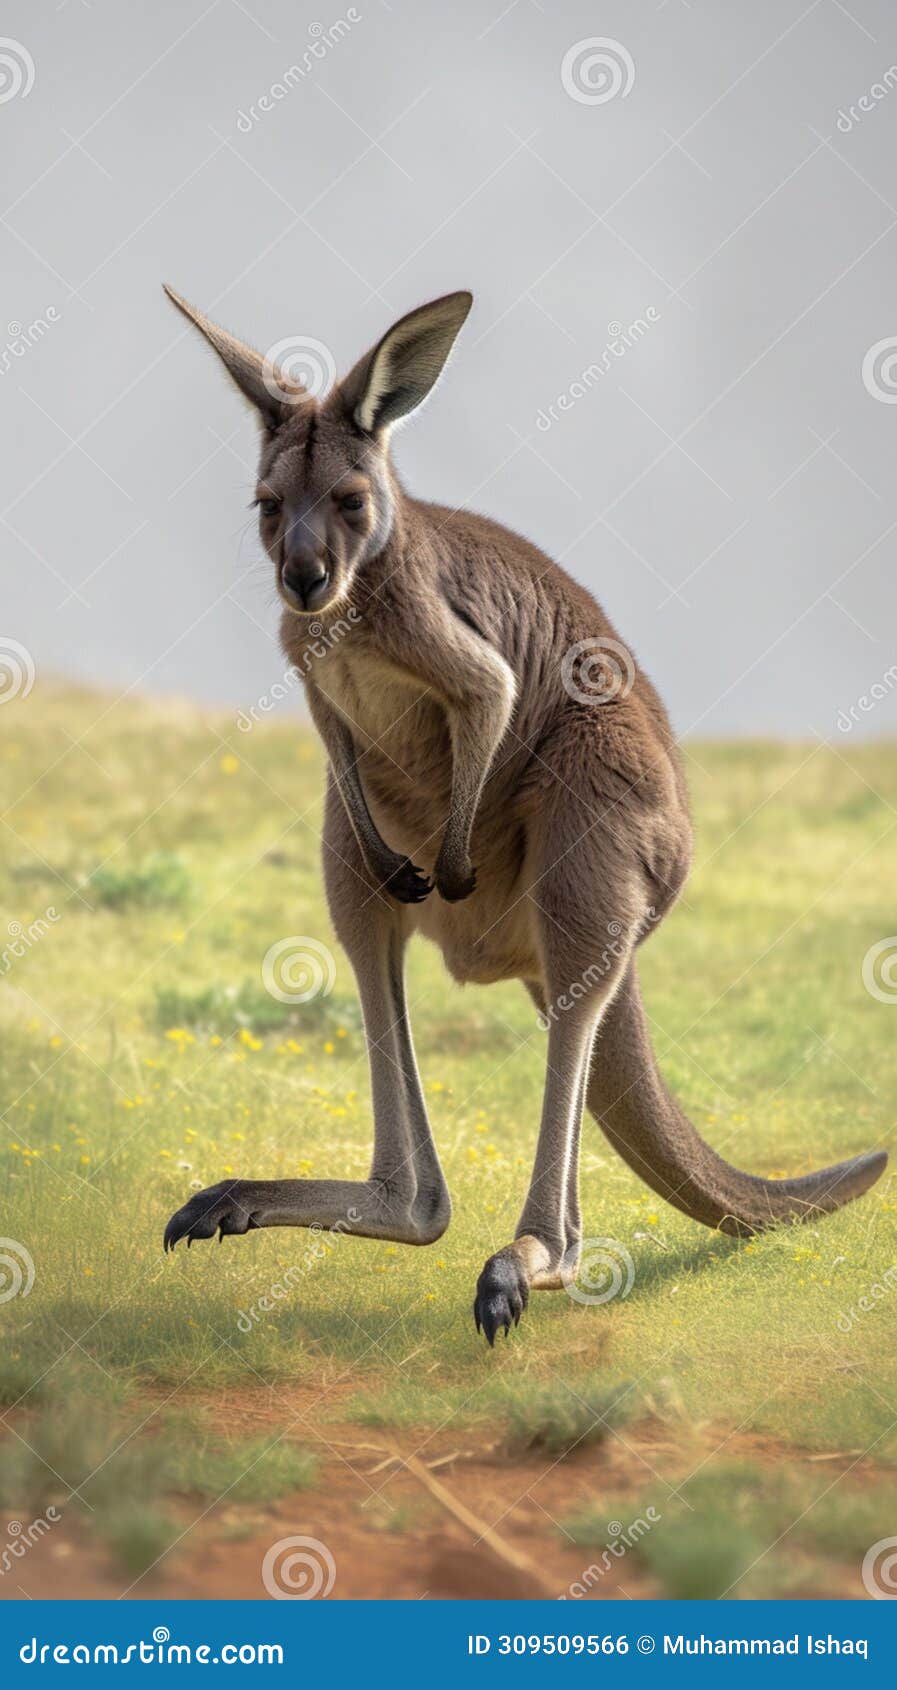 energetic wildlife kangaroos portrait while in mid air, displaying jumping prowess